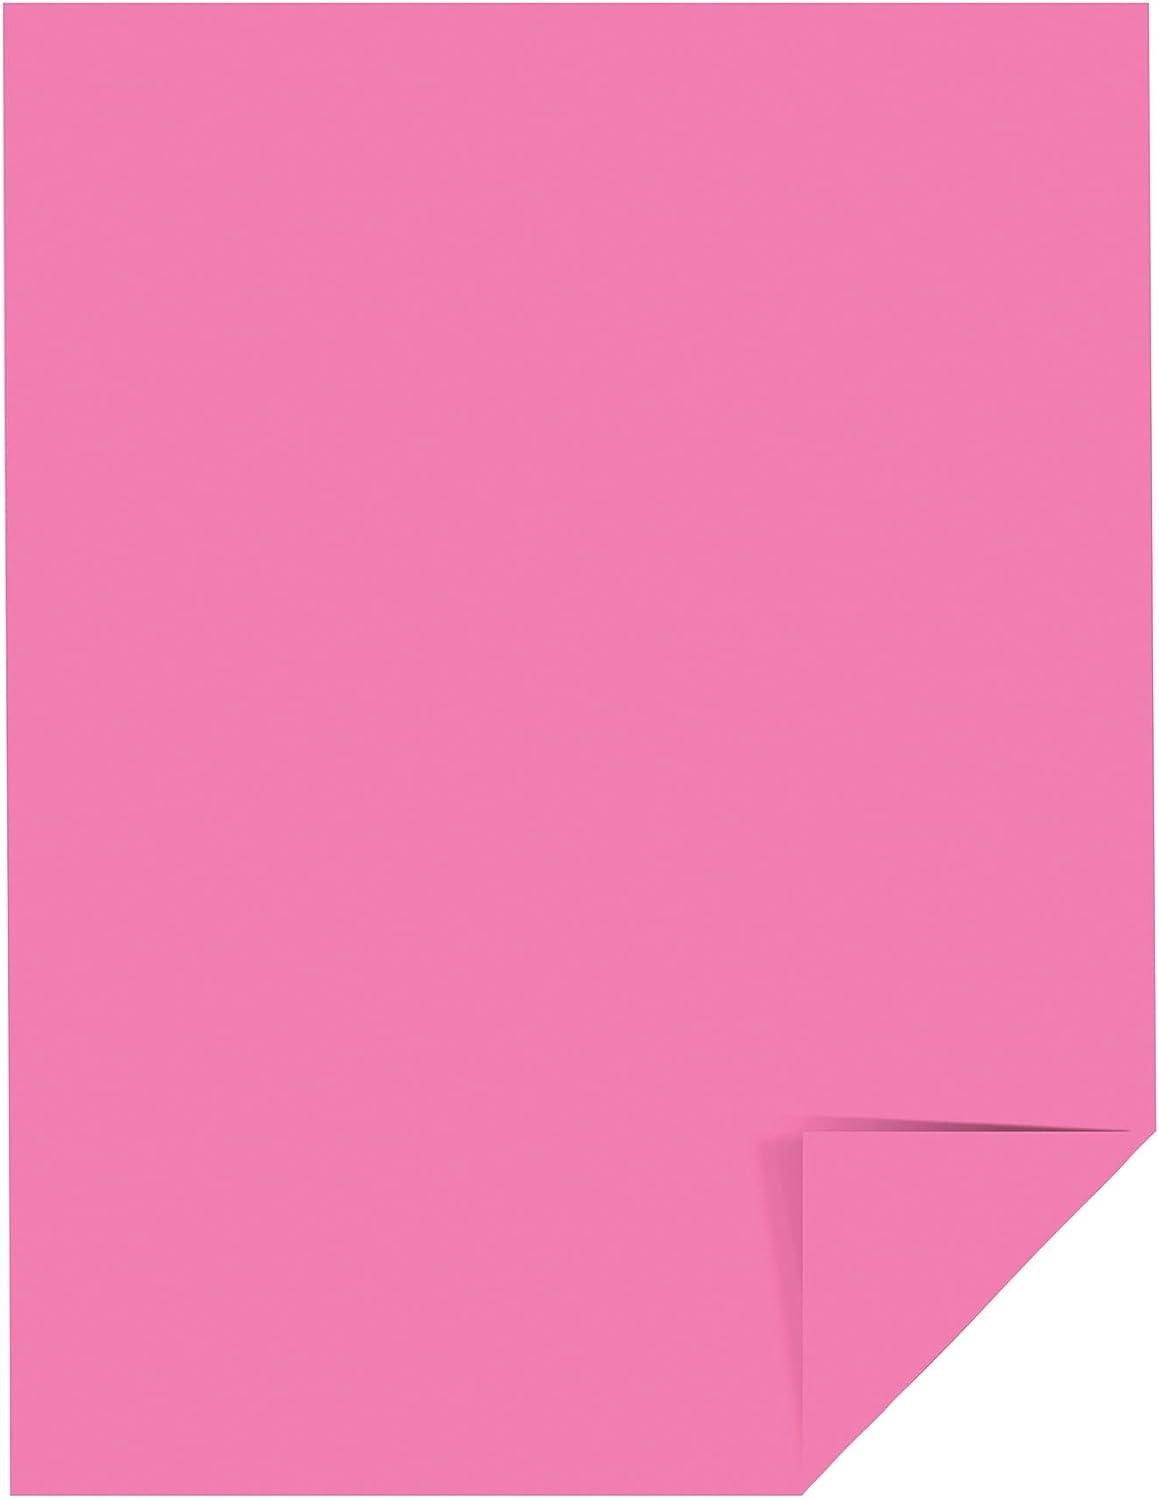 Neenah Card Stock, 65 lbs, 8.5 x 11, Bright White, 250